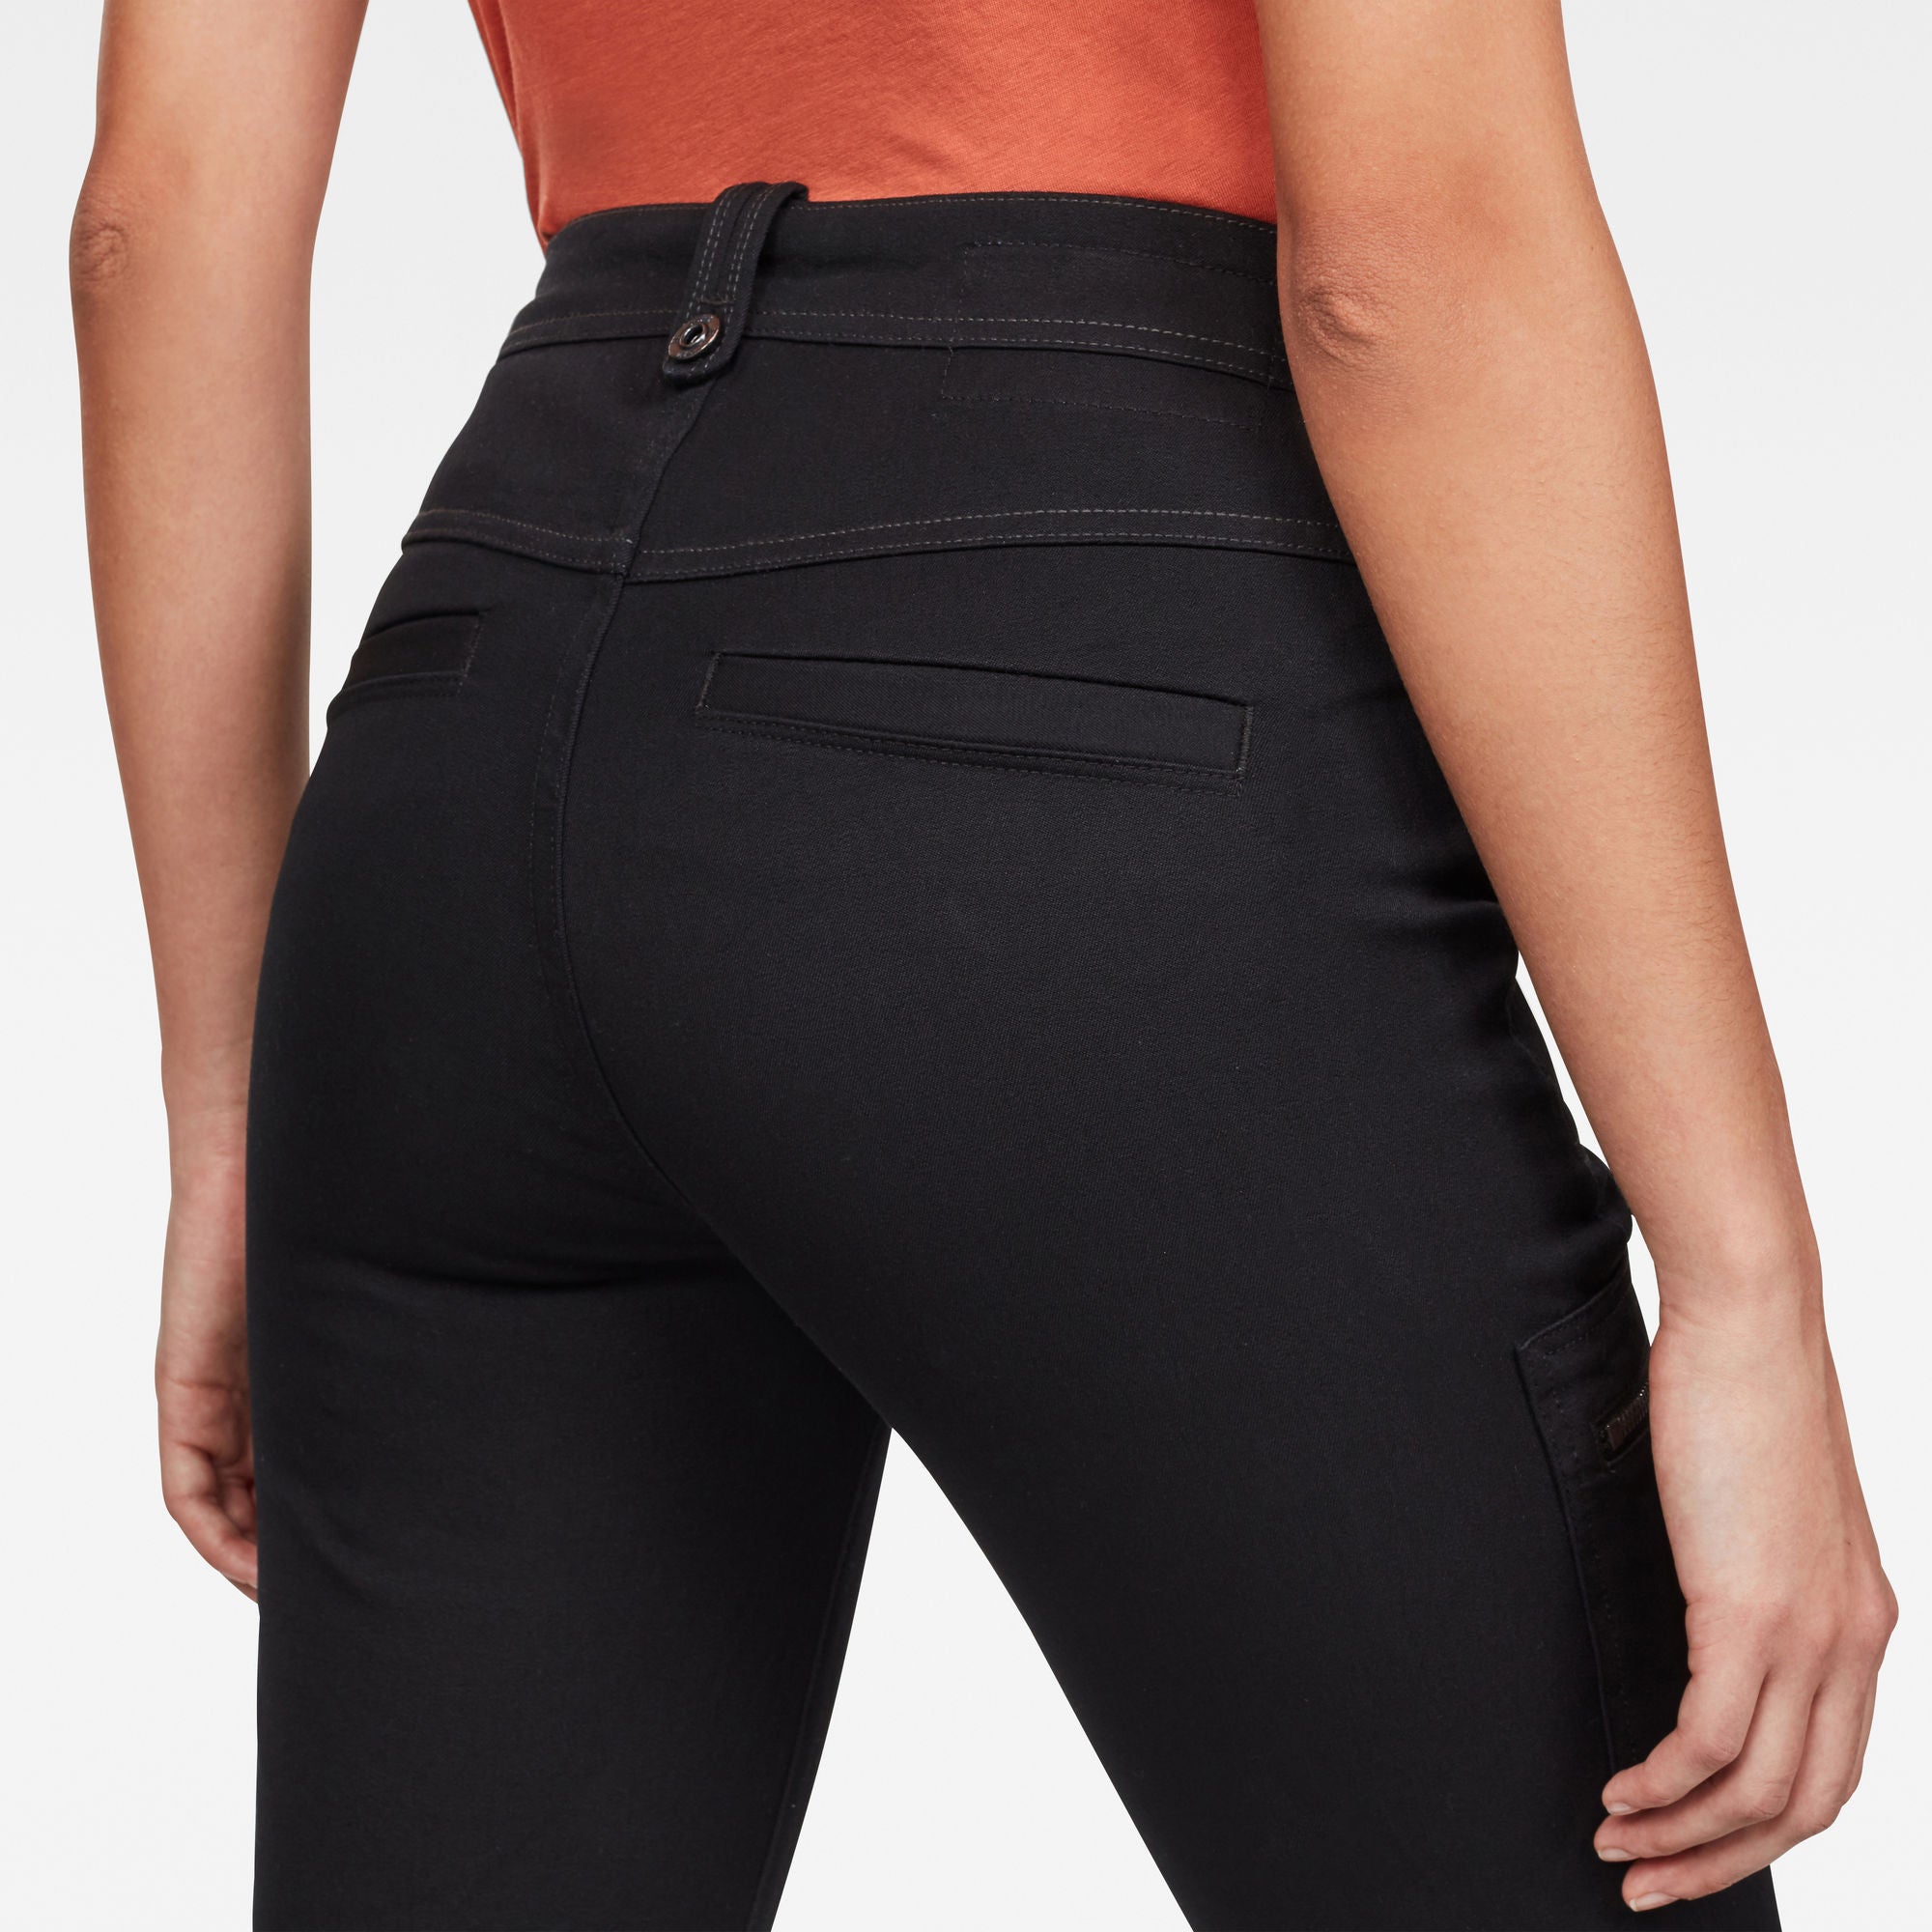 Women's Cargo pants black skinny